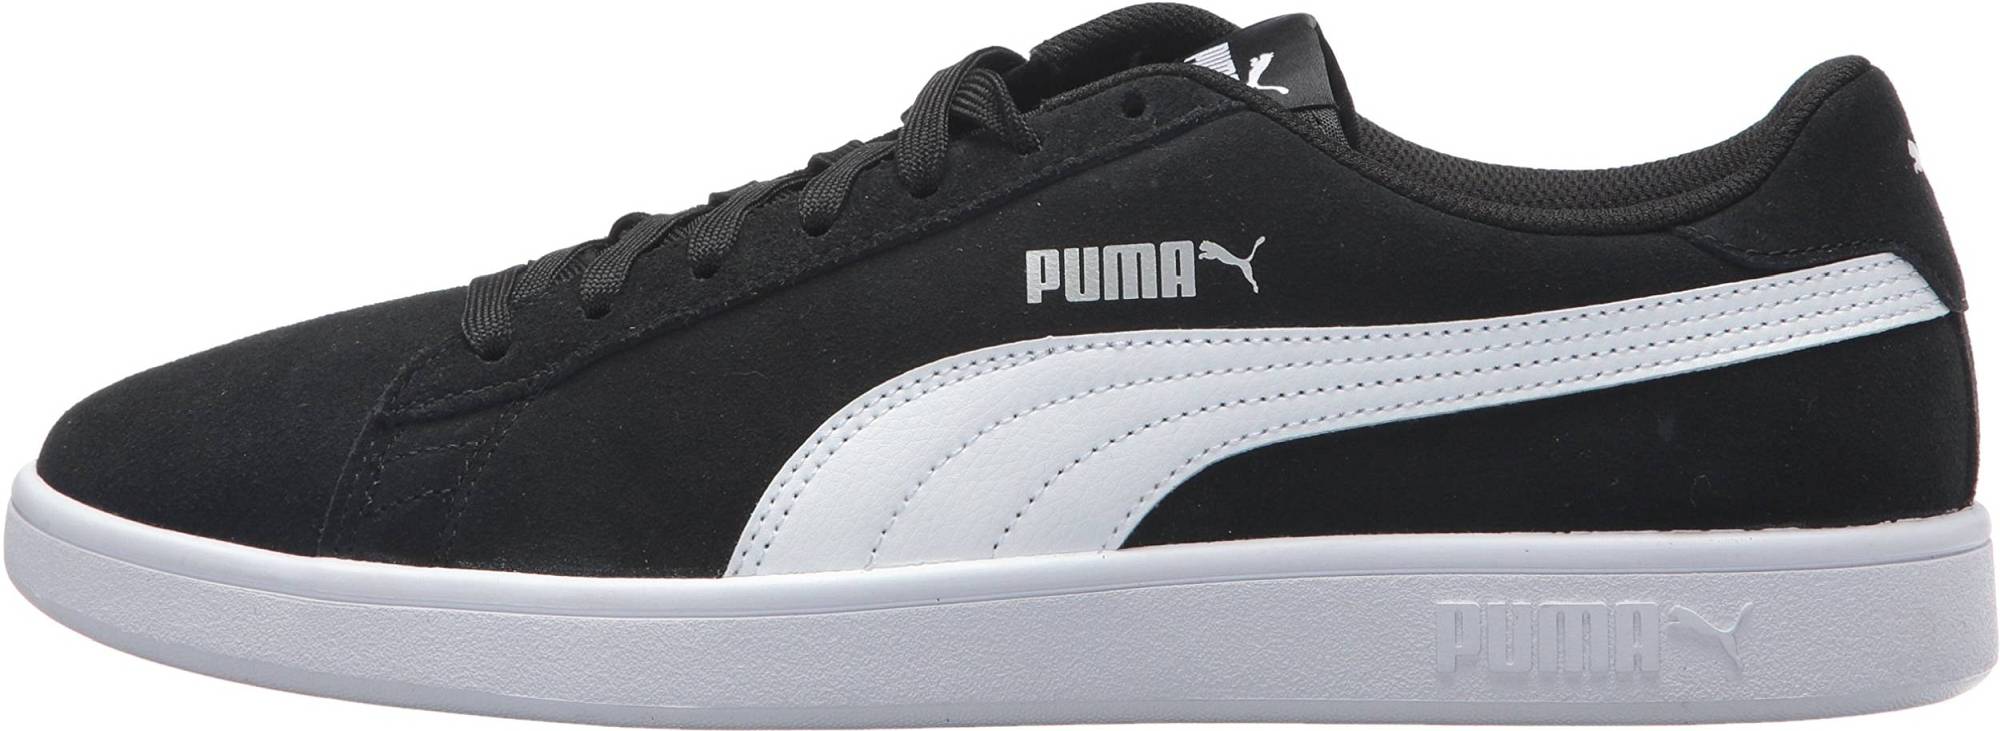 Puma Smash v2 – Shoes Reviews & Reasons To Buy